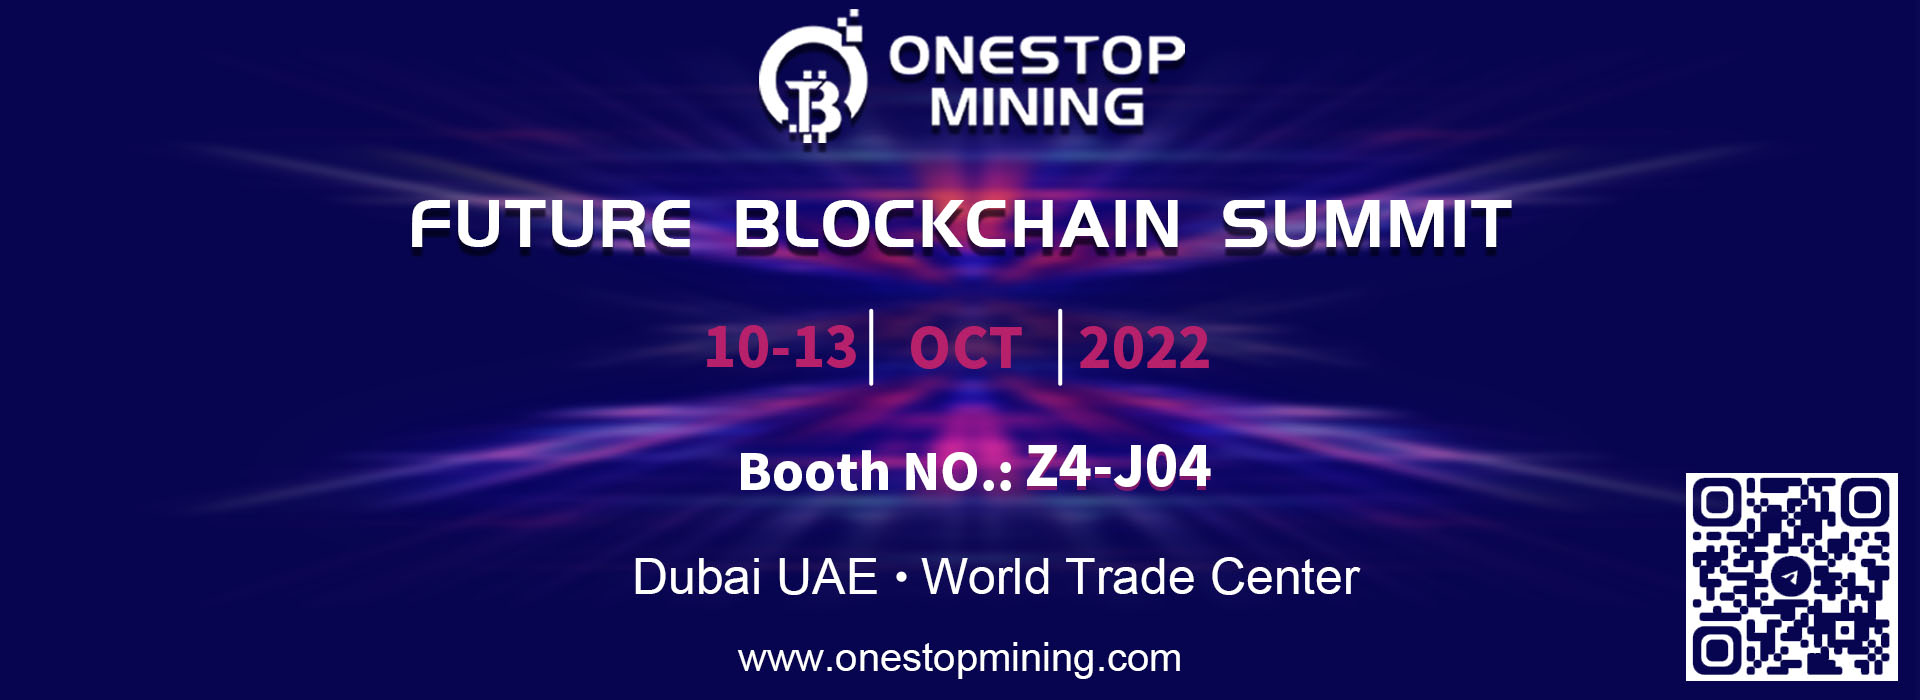 OnestopMining Will Attend the 5th FUTURE BLOCKCHAIN SUMMIT Dubai